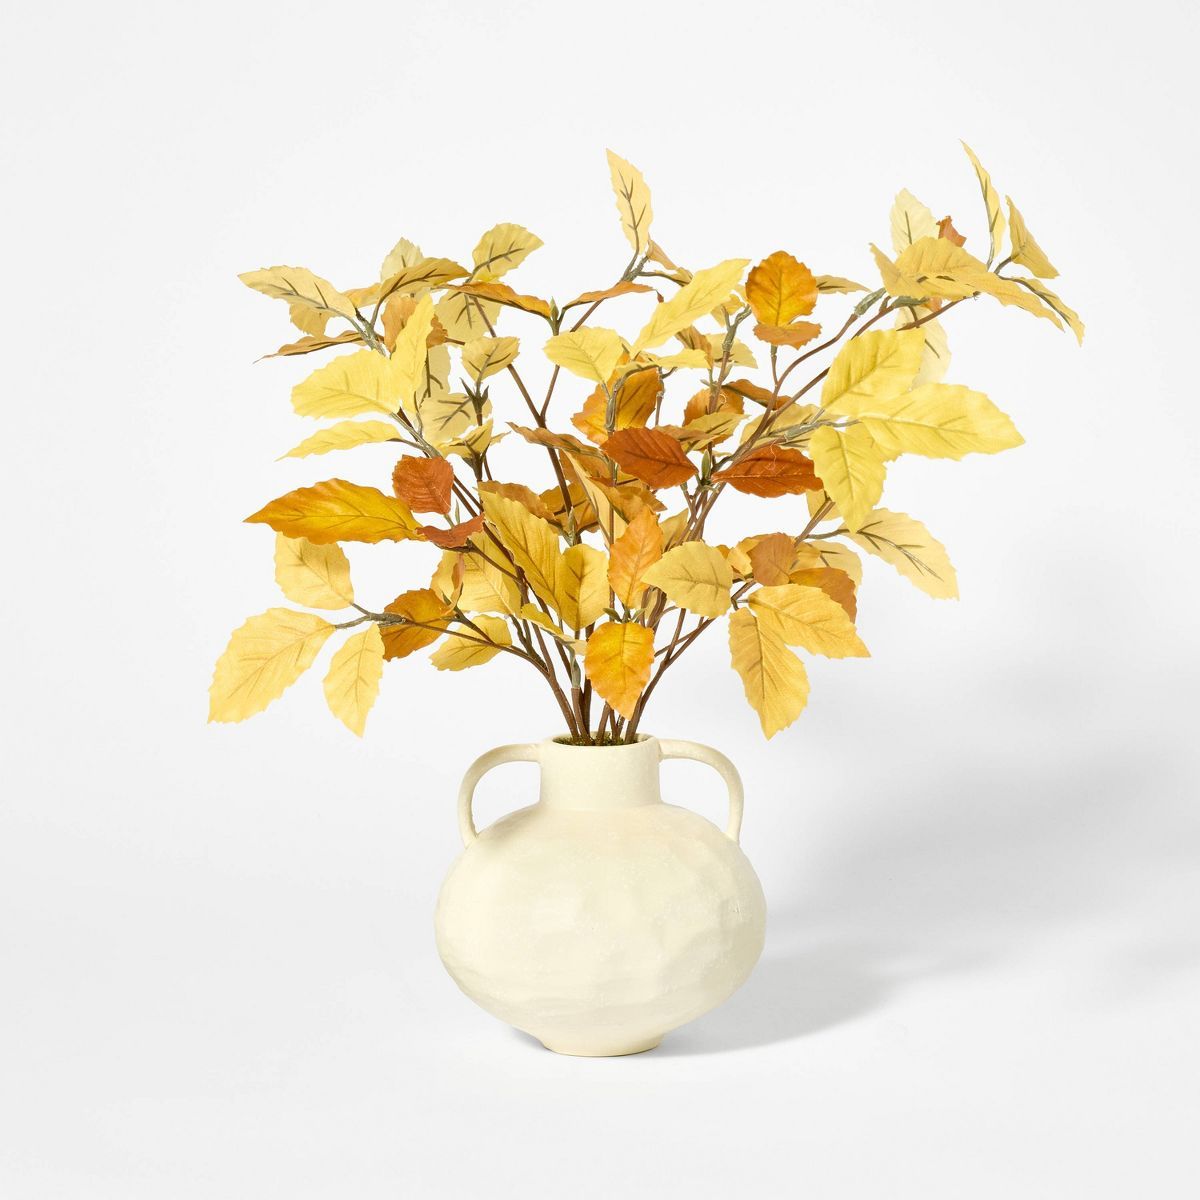 Leaf Arrangement Decorative Plant Yellow Gold - Threshold™ designed with Studio McGee | Target